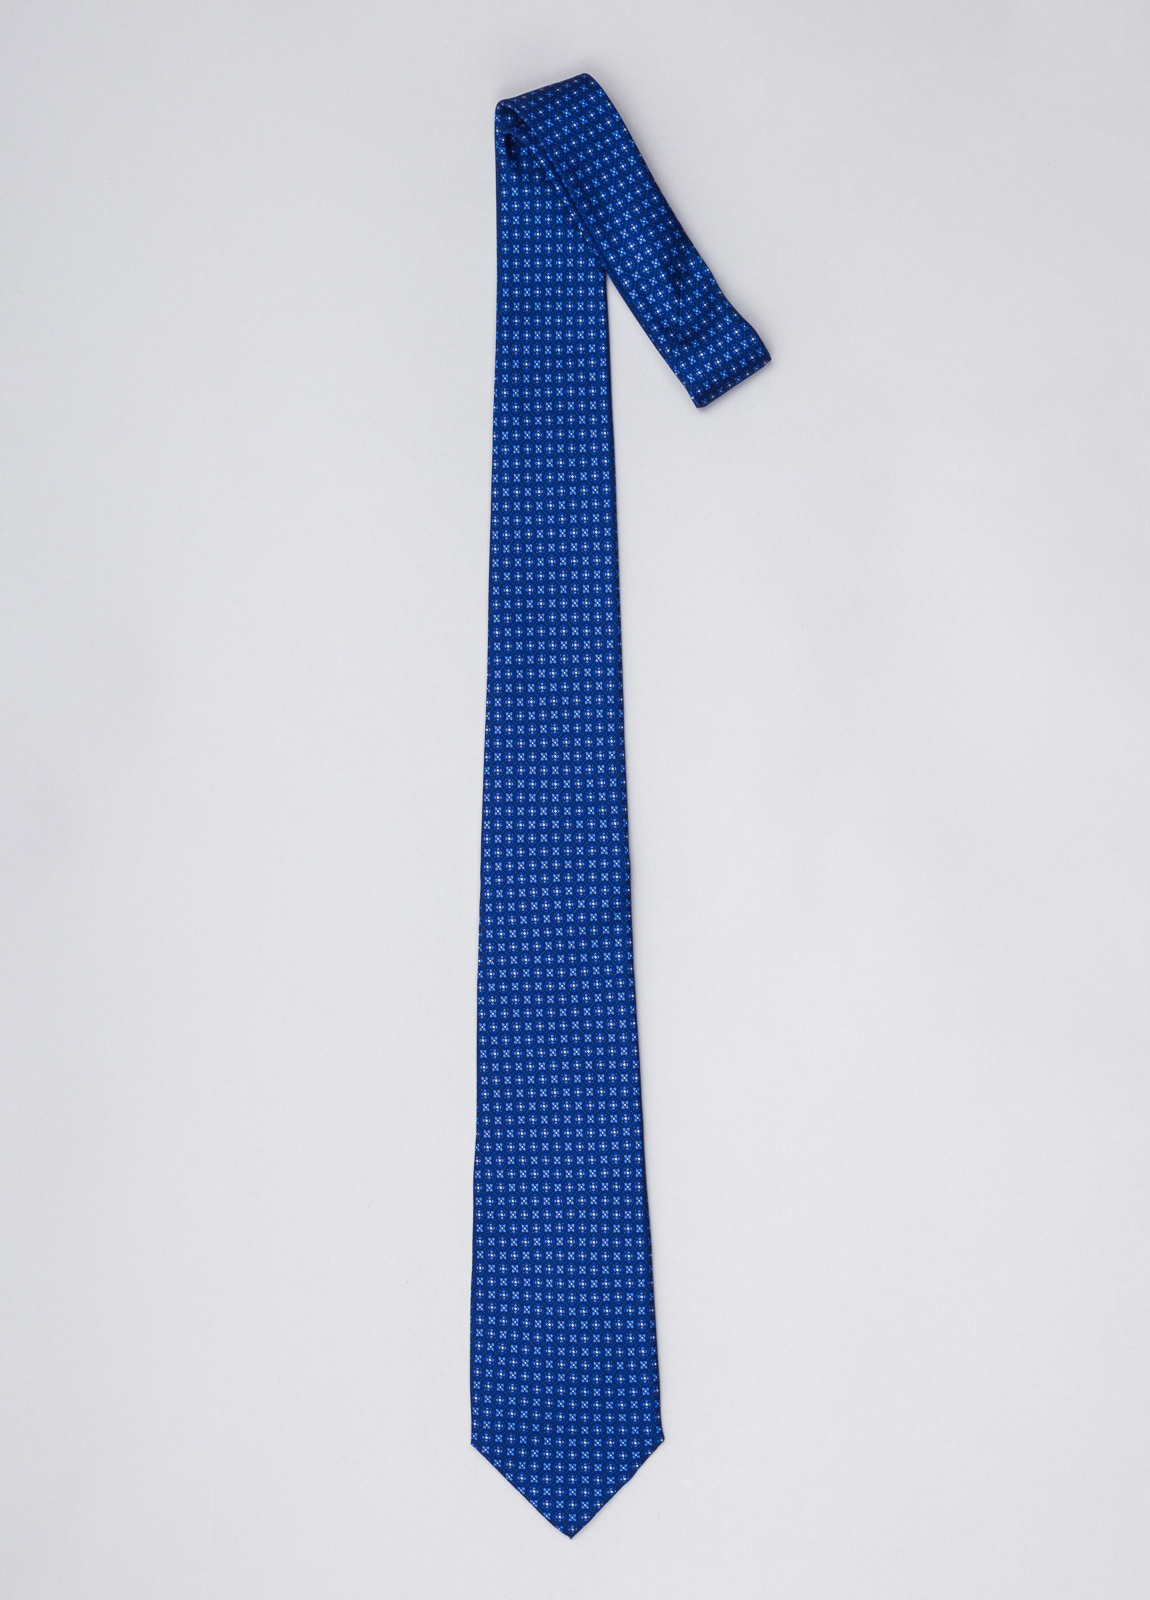 Corbata FUREST COLECCIÓN color azul tinta con dibujo floral - Ítem1